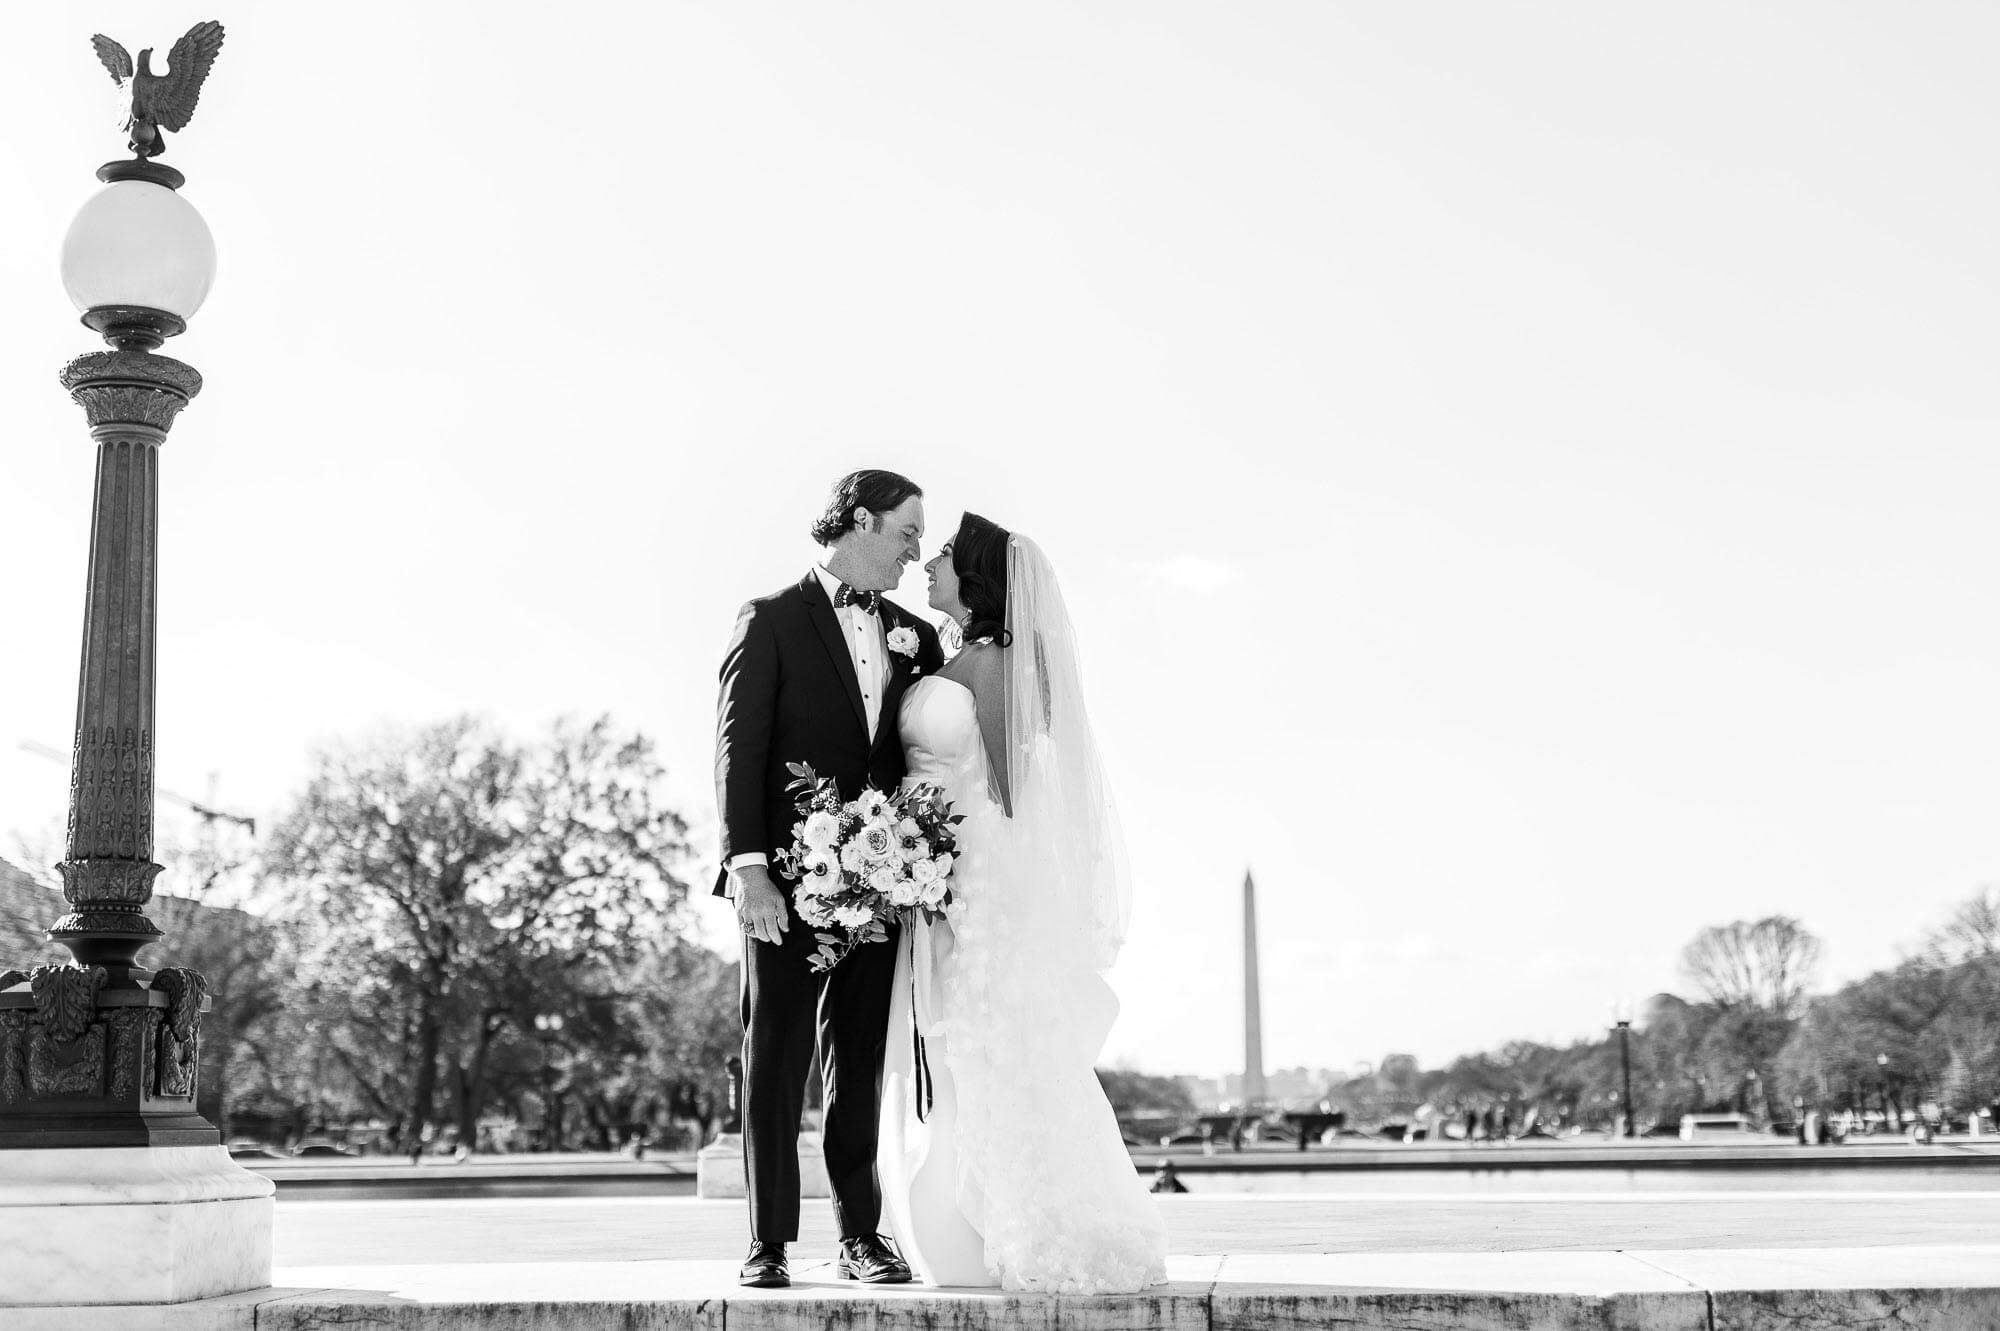 Fall wedding in Washington DC near the monuments